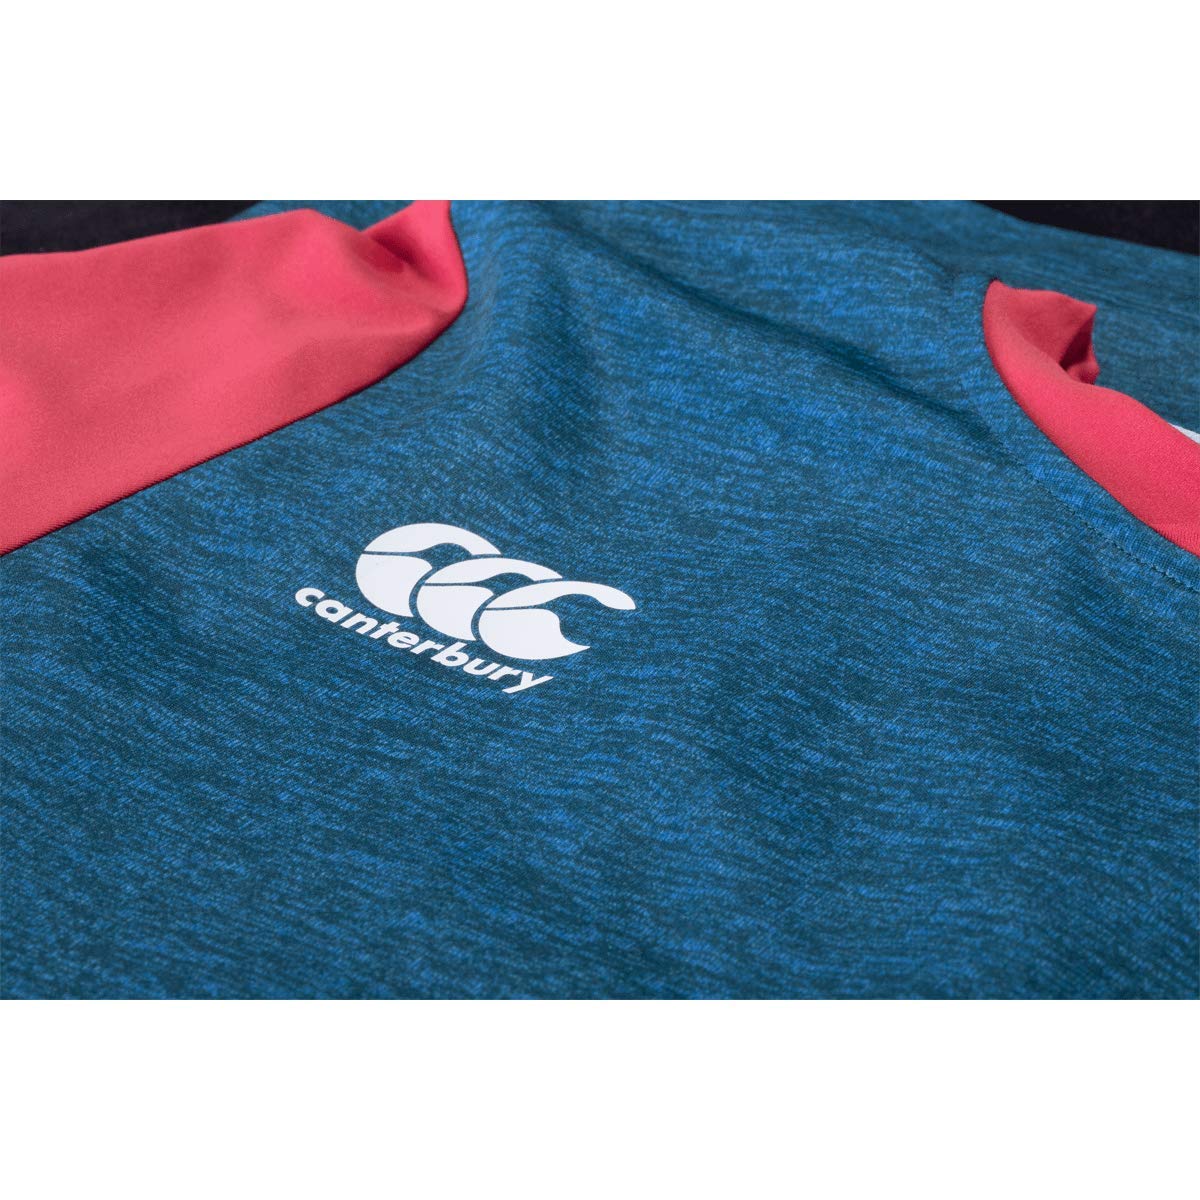 Canterbury USA Rugby Vapodri Drill T-Shirt, Navy/Red